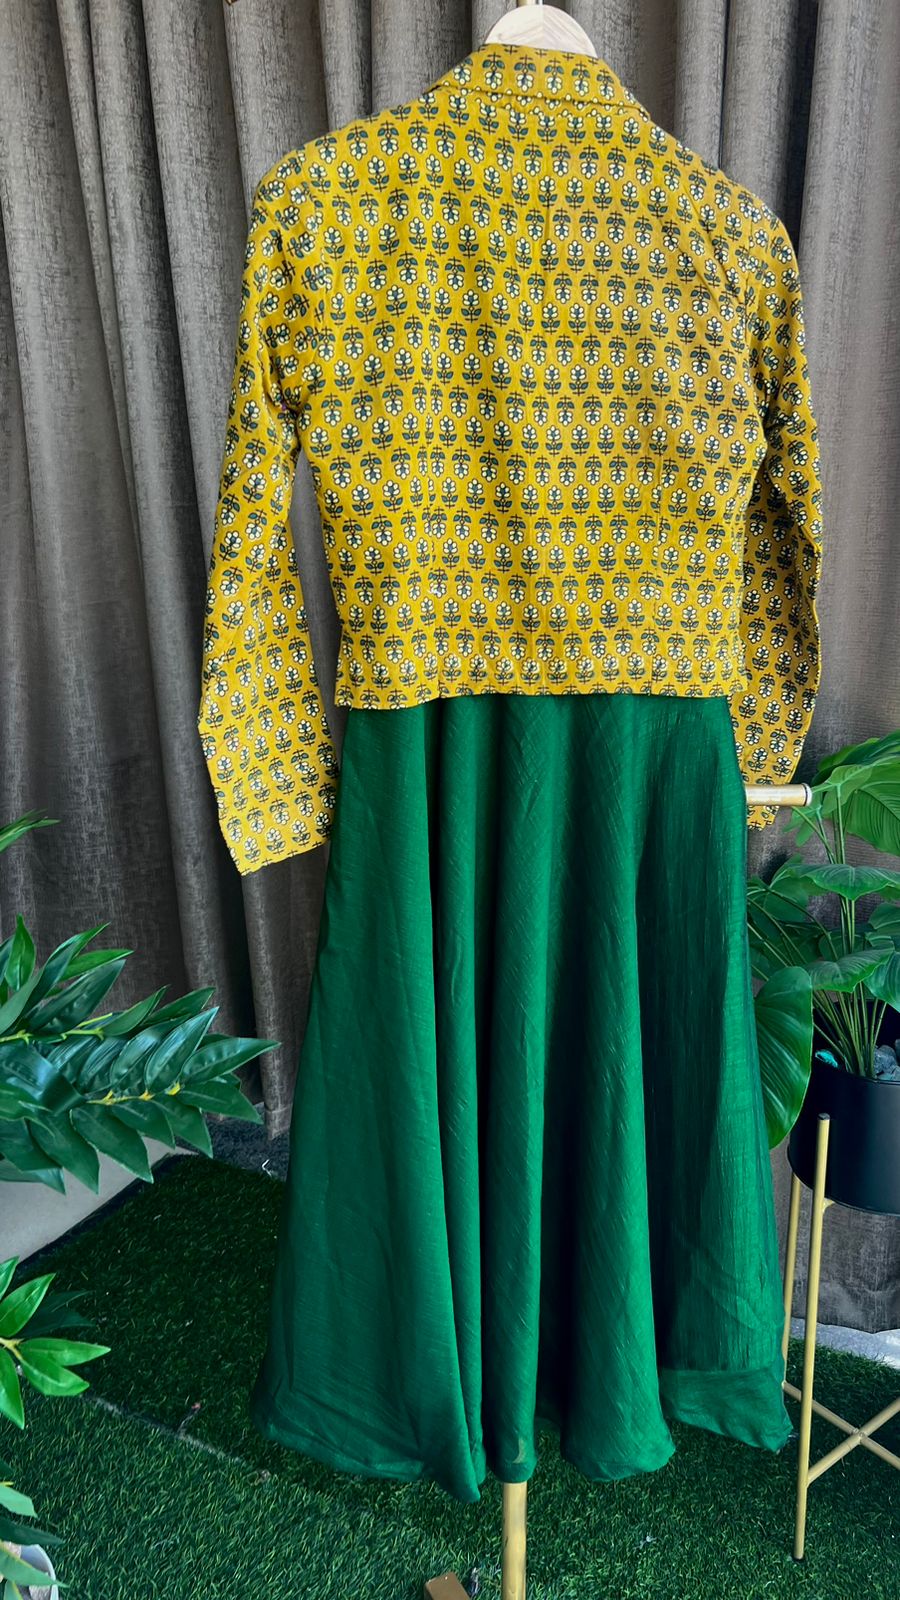 Green & yellow spaghetti dress & blazer coord sets